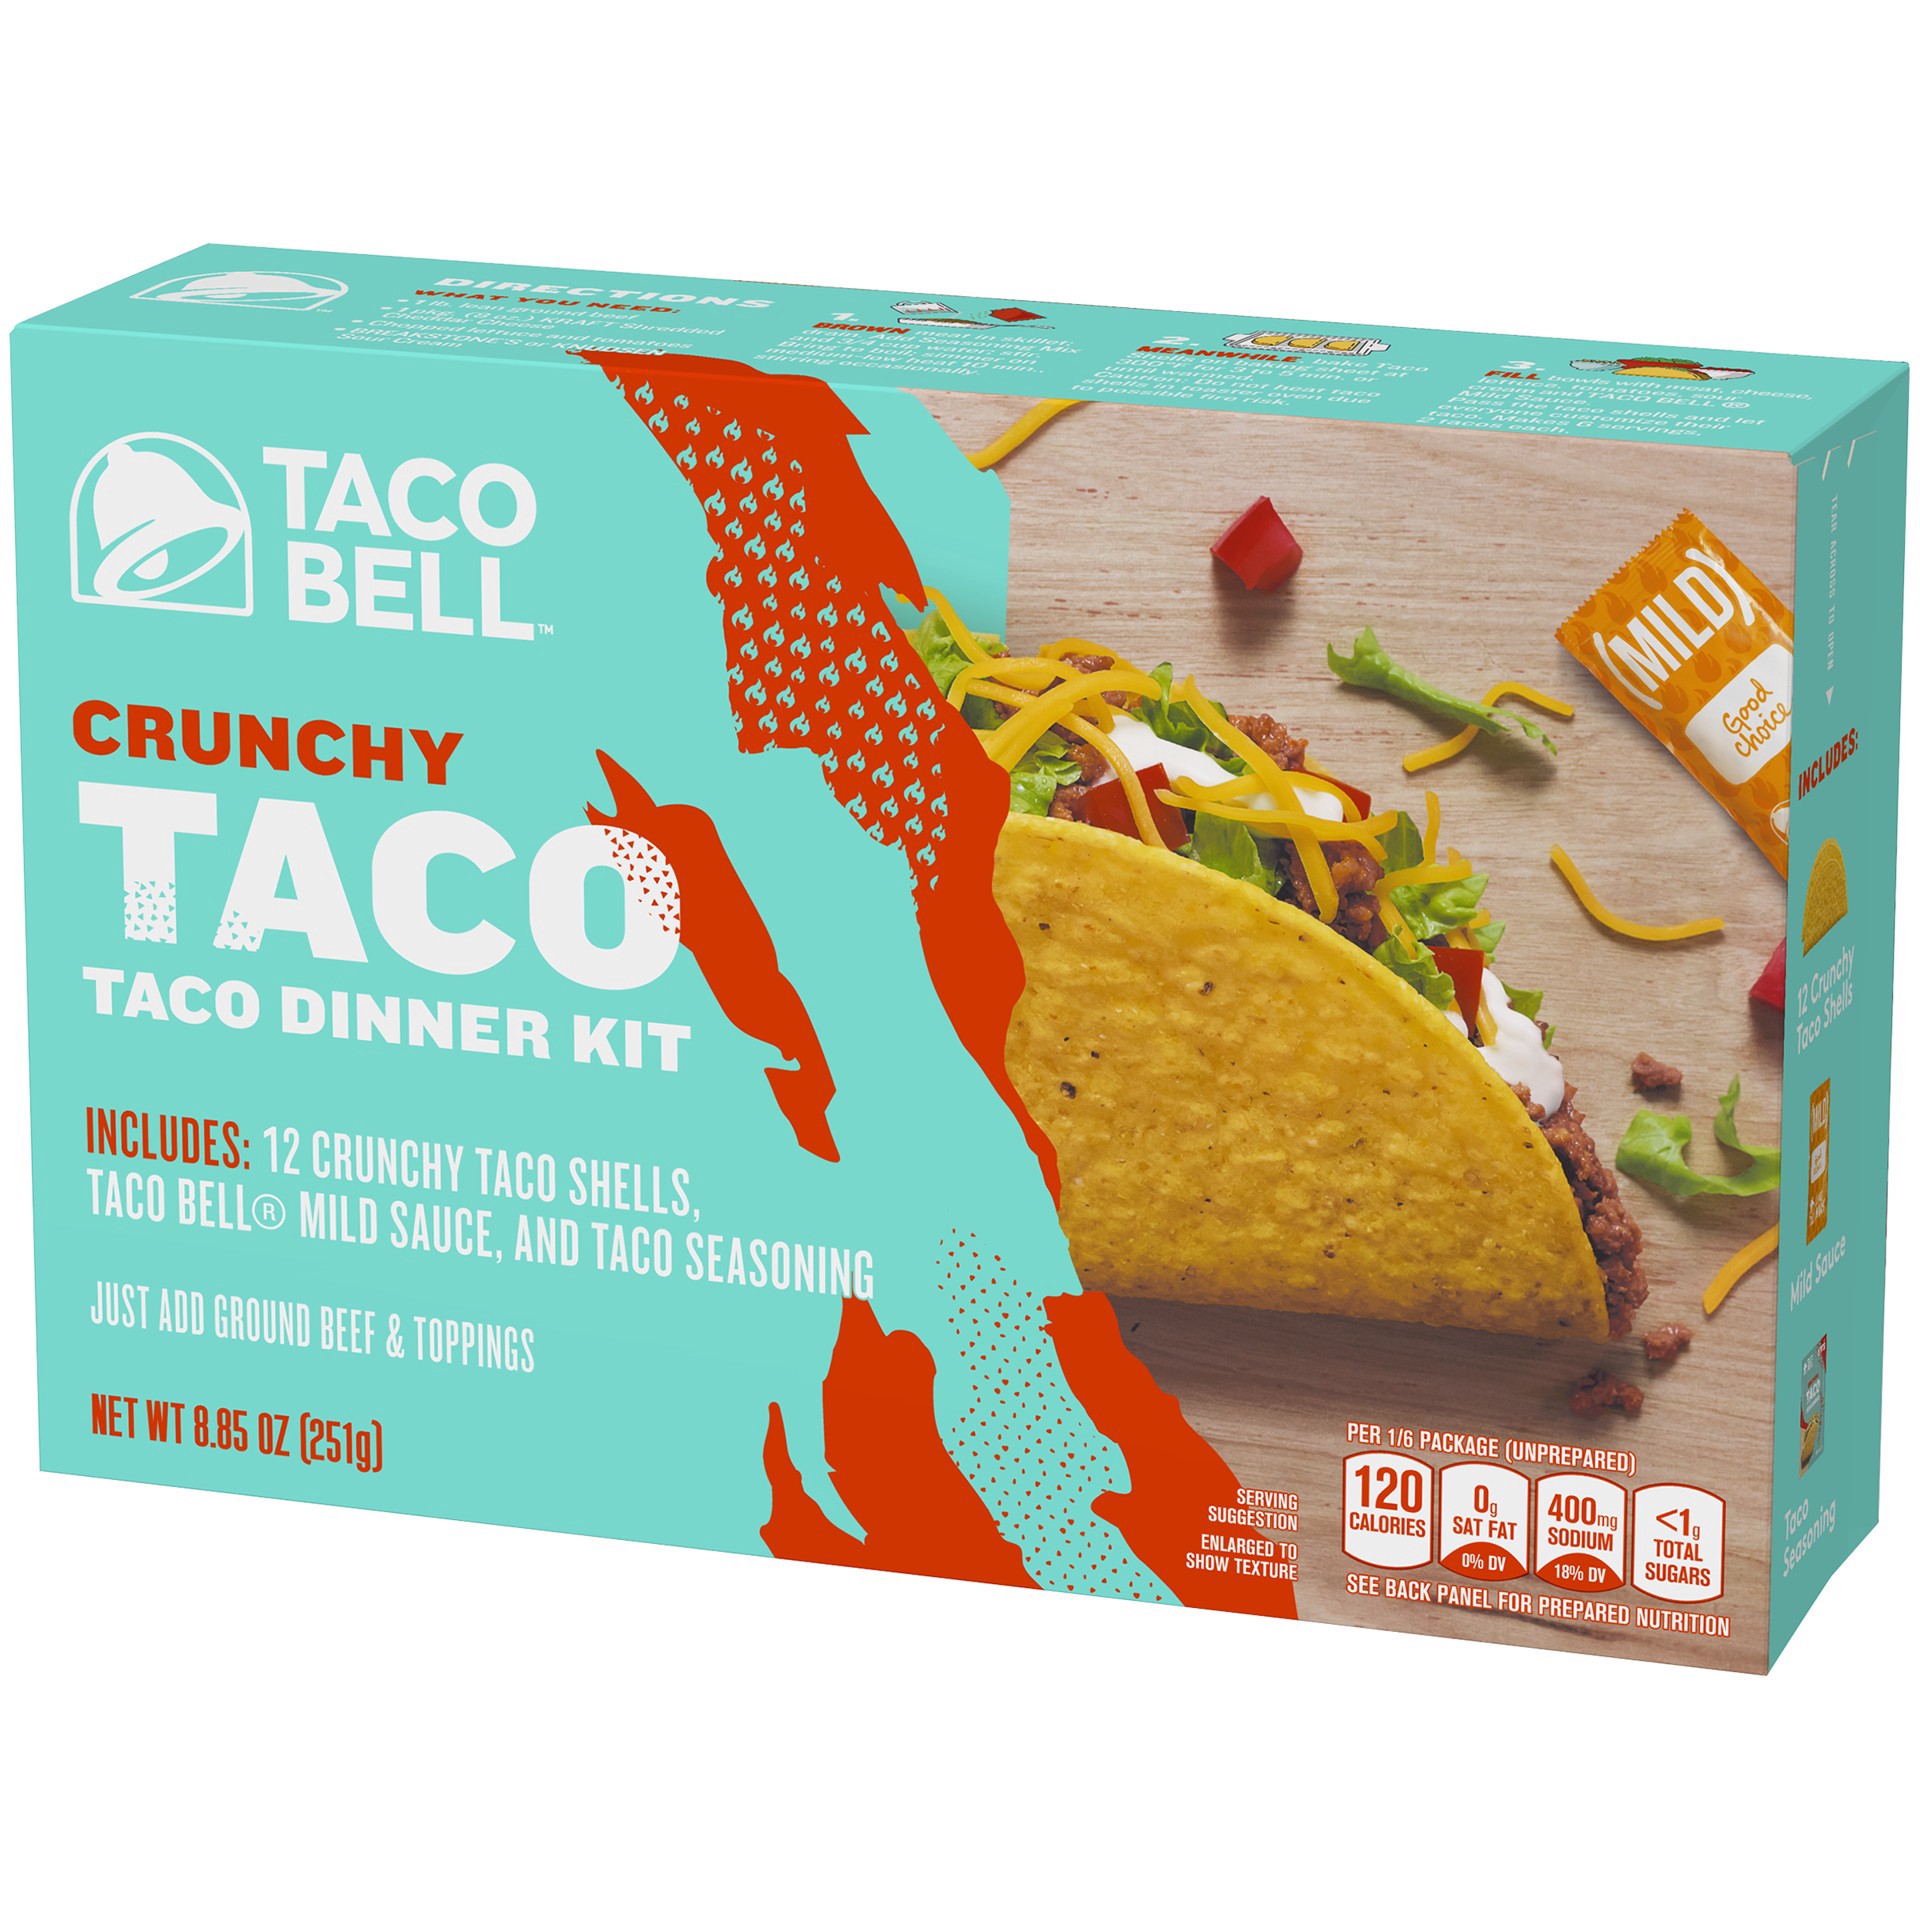 slide 52 of 91, Taco Bell Crunchy Taco Cravings Kit with 12 Crunchy Taco Shells, Taco Bell Mild Sauce & Seasoning, 8.85 oz Box, 1 ct